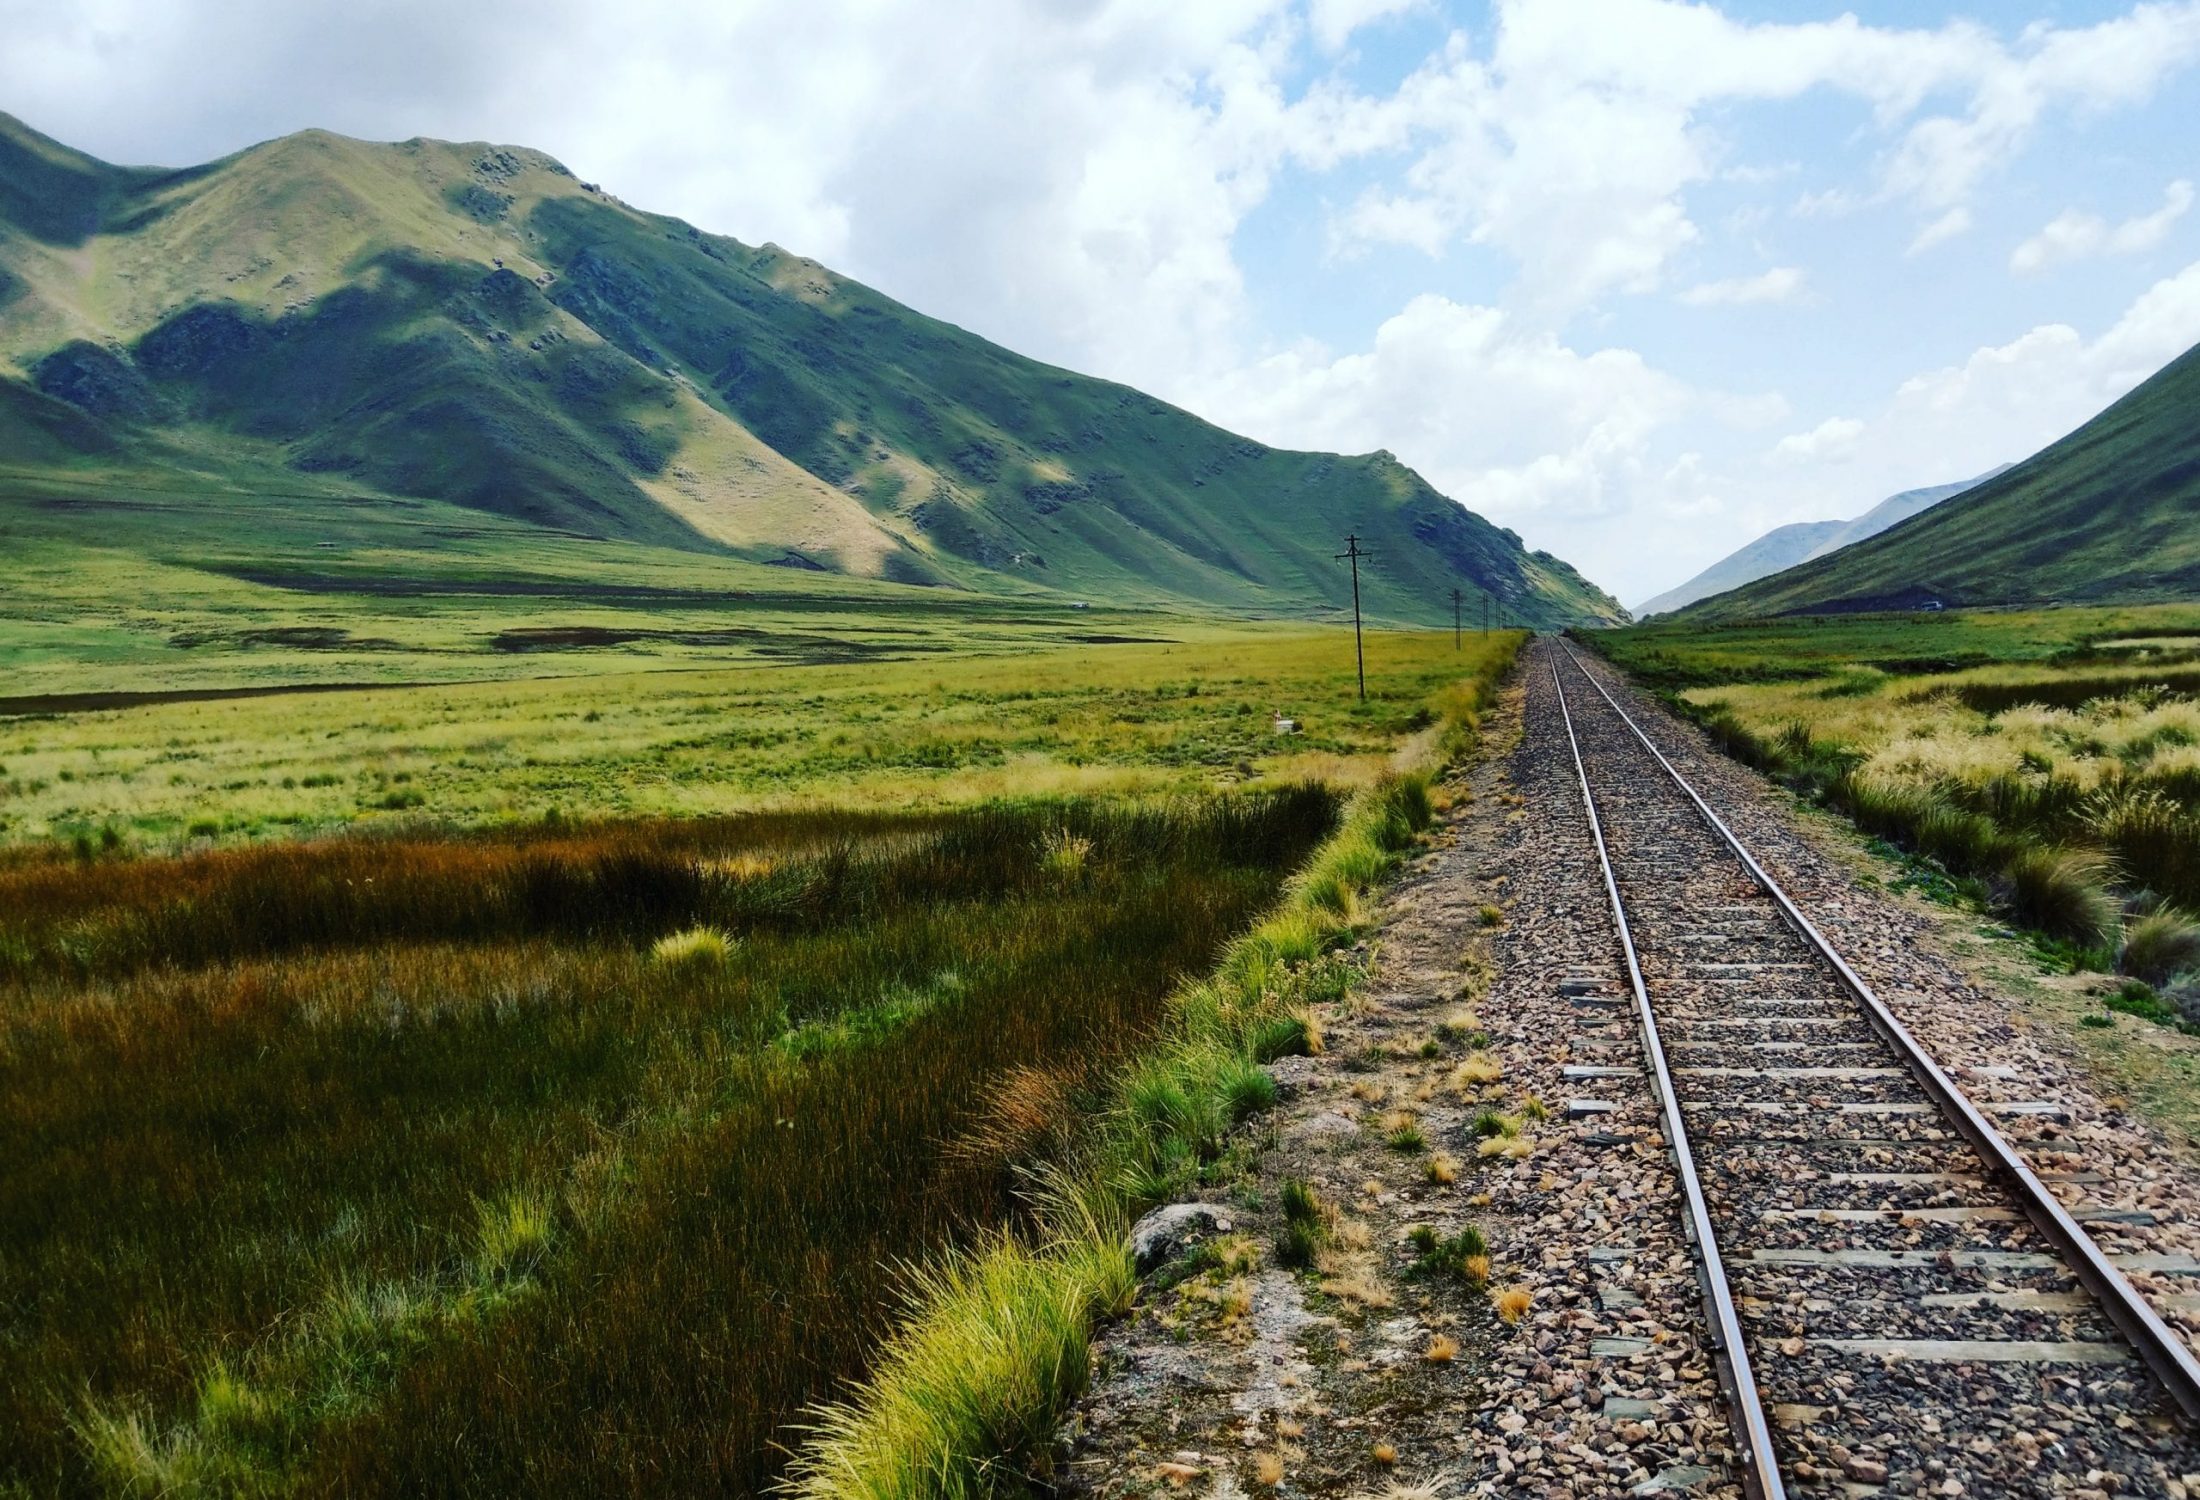 Flashpacking in Peru - The greatest train journey